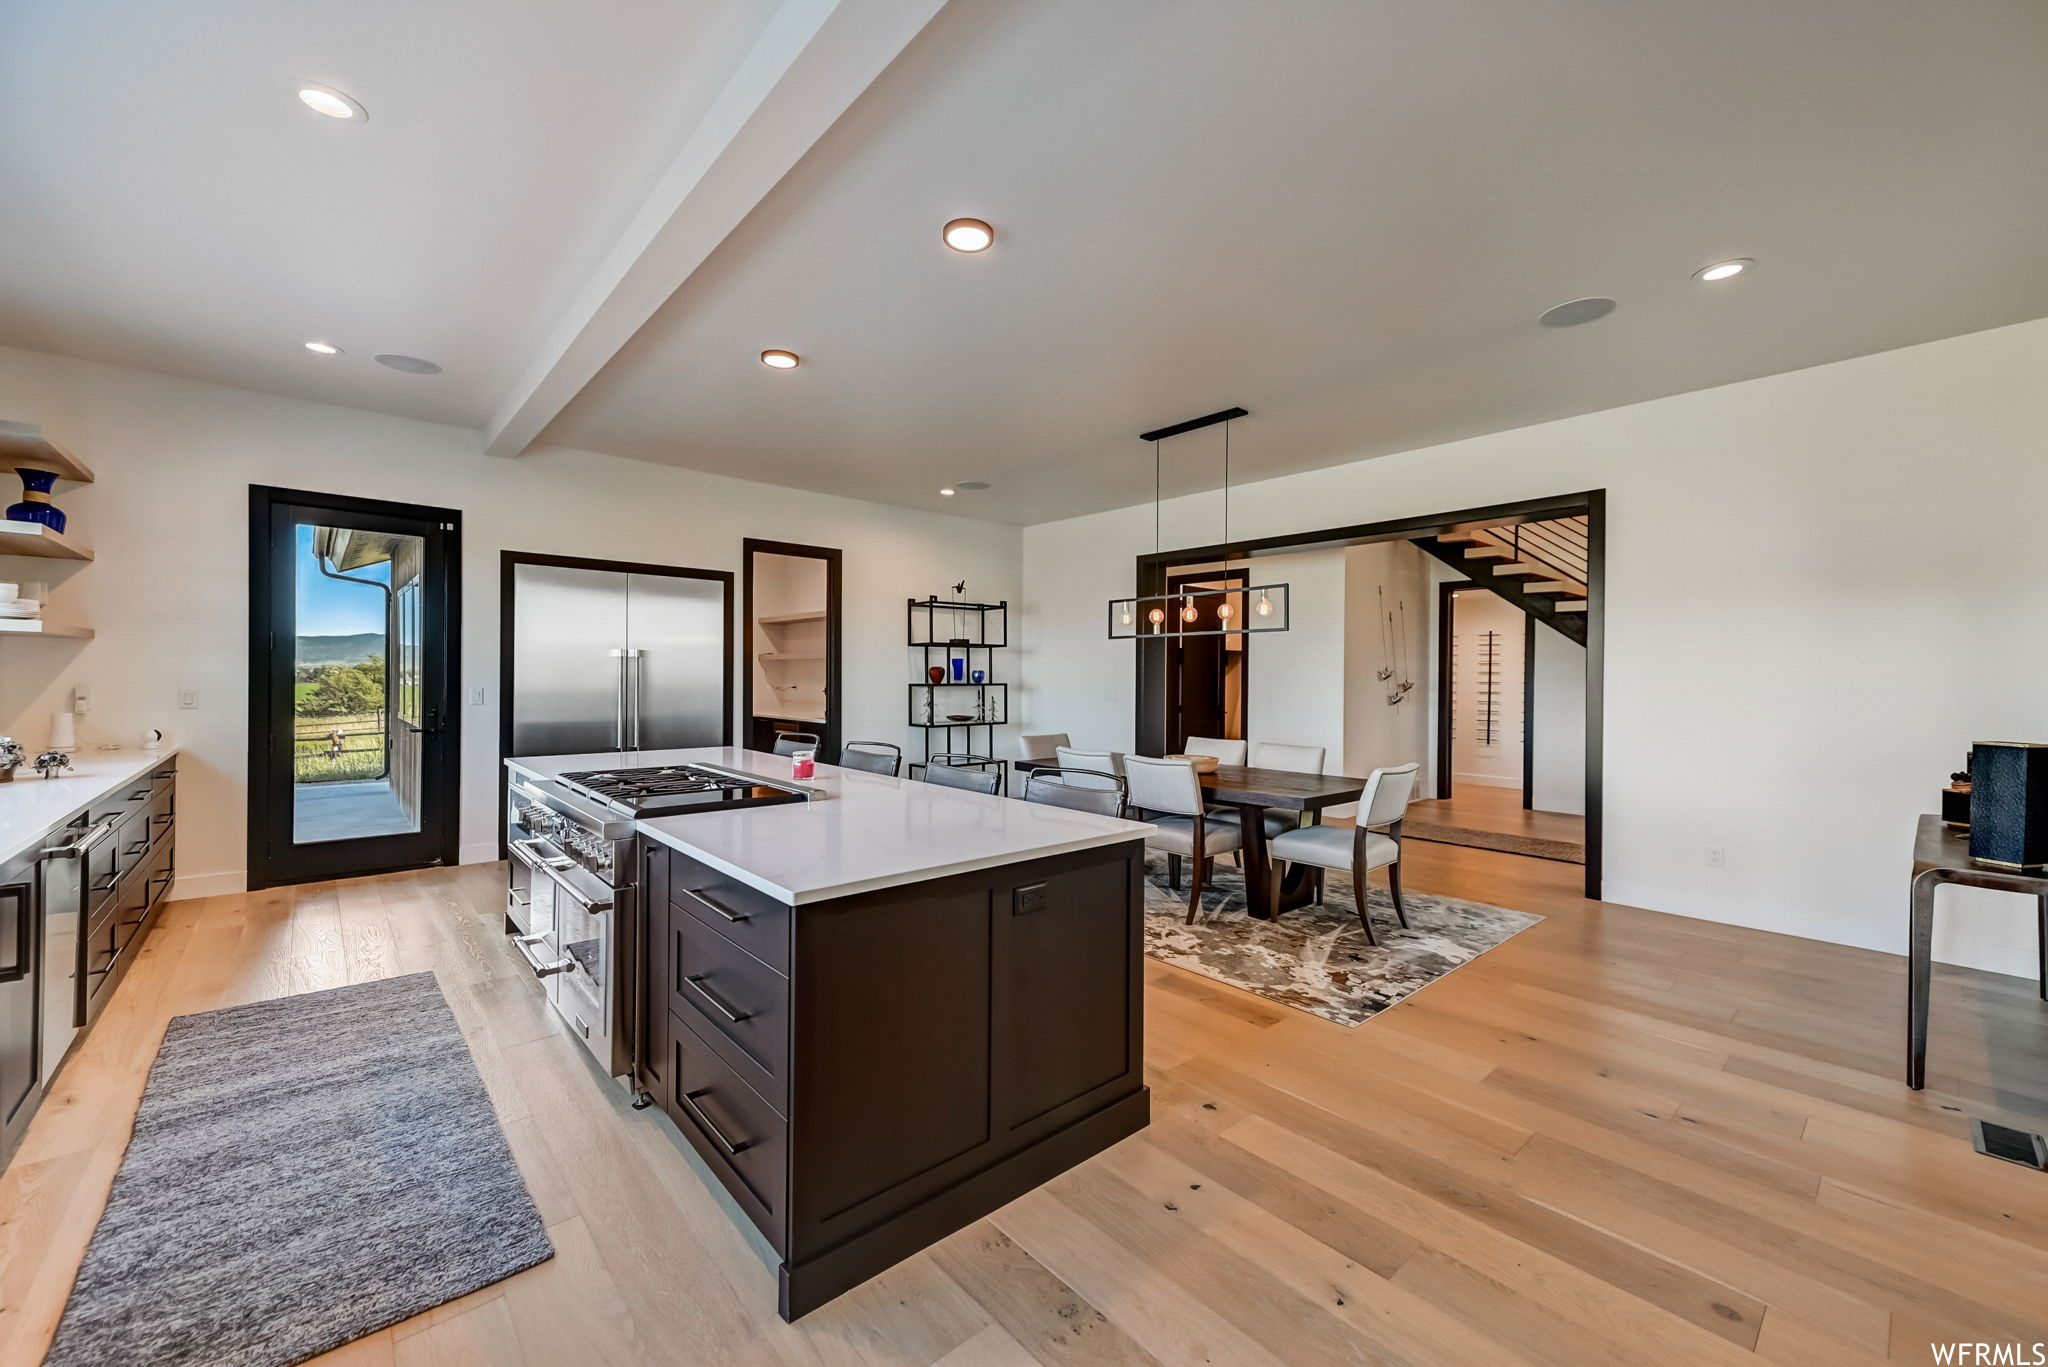 Kitchen featuring premium appliances, pendant lighting, dark brown cabinets, a center island, and light wood-type flooring